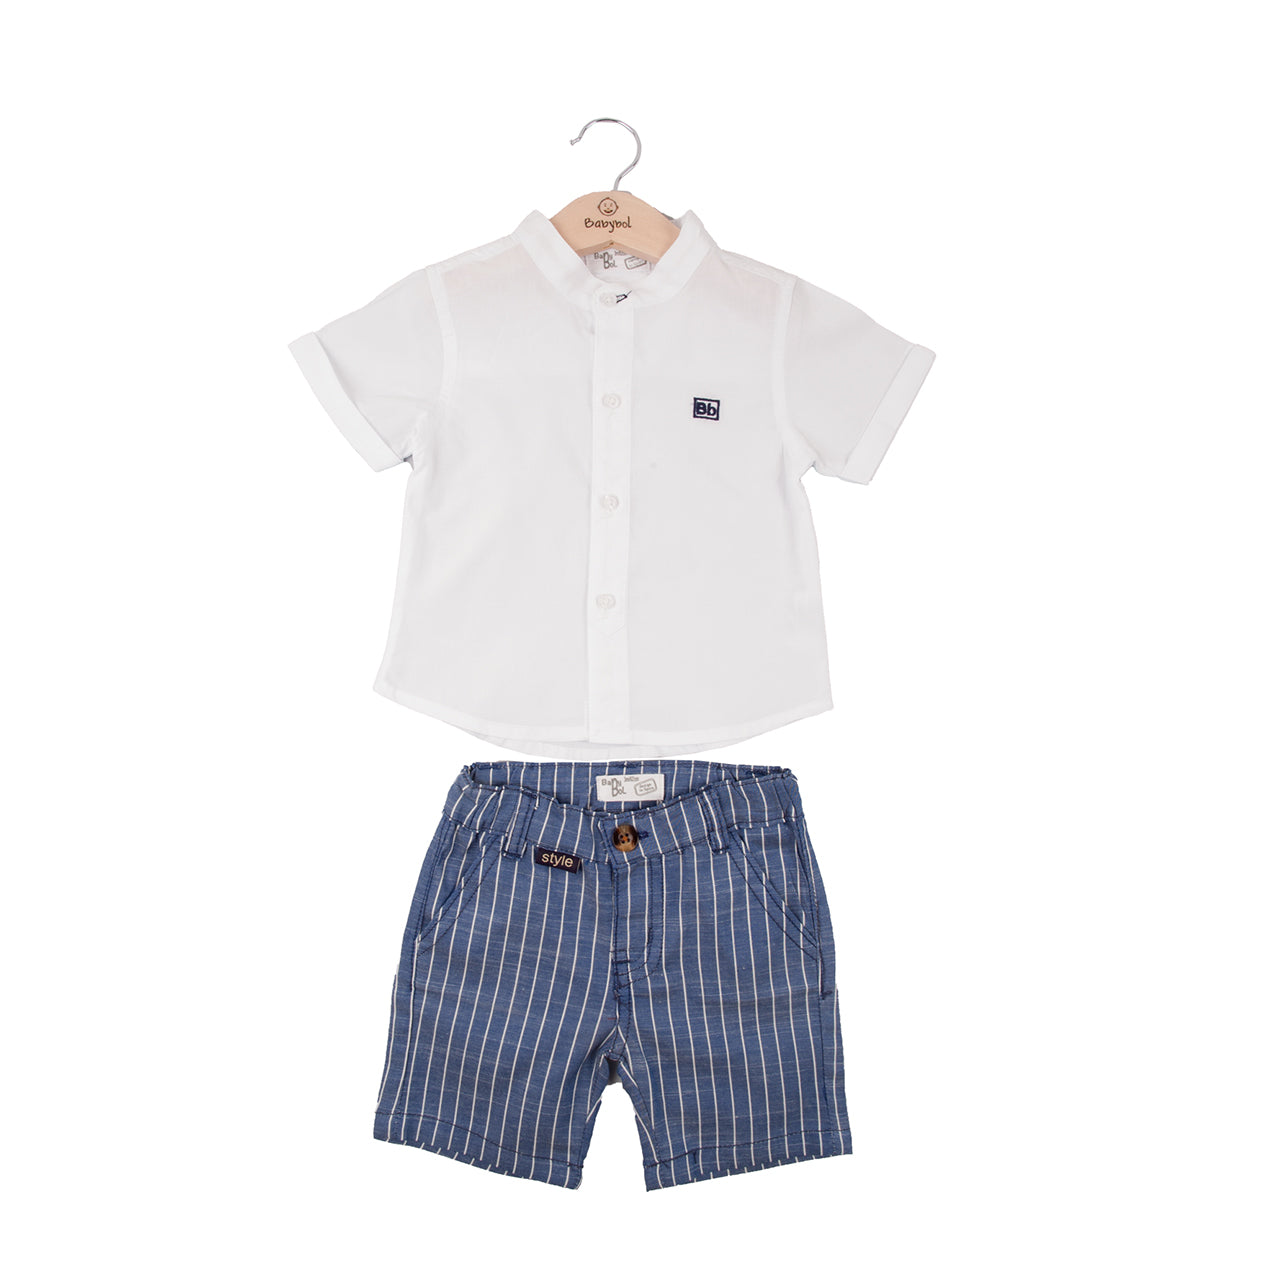 Striped shorts & shirt set